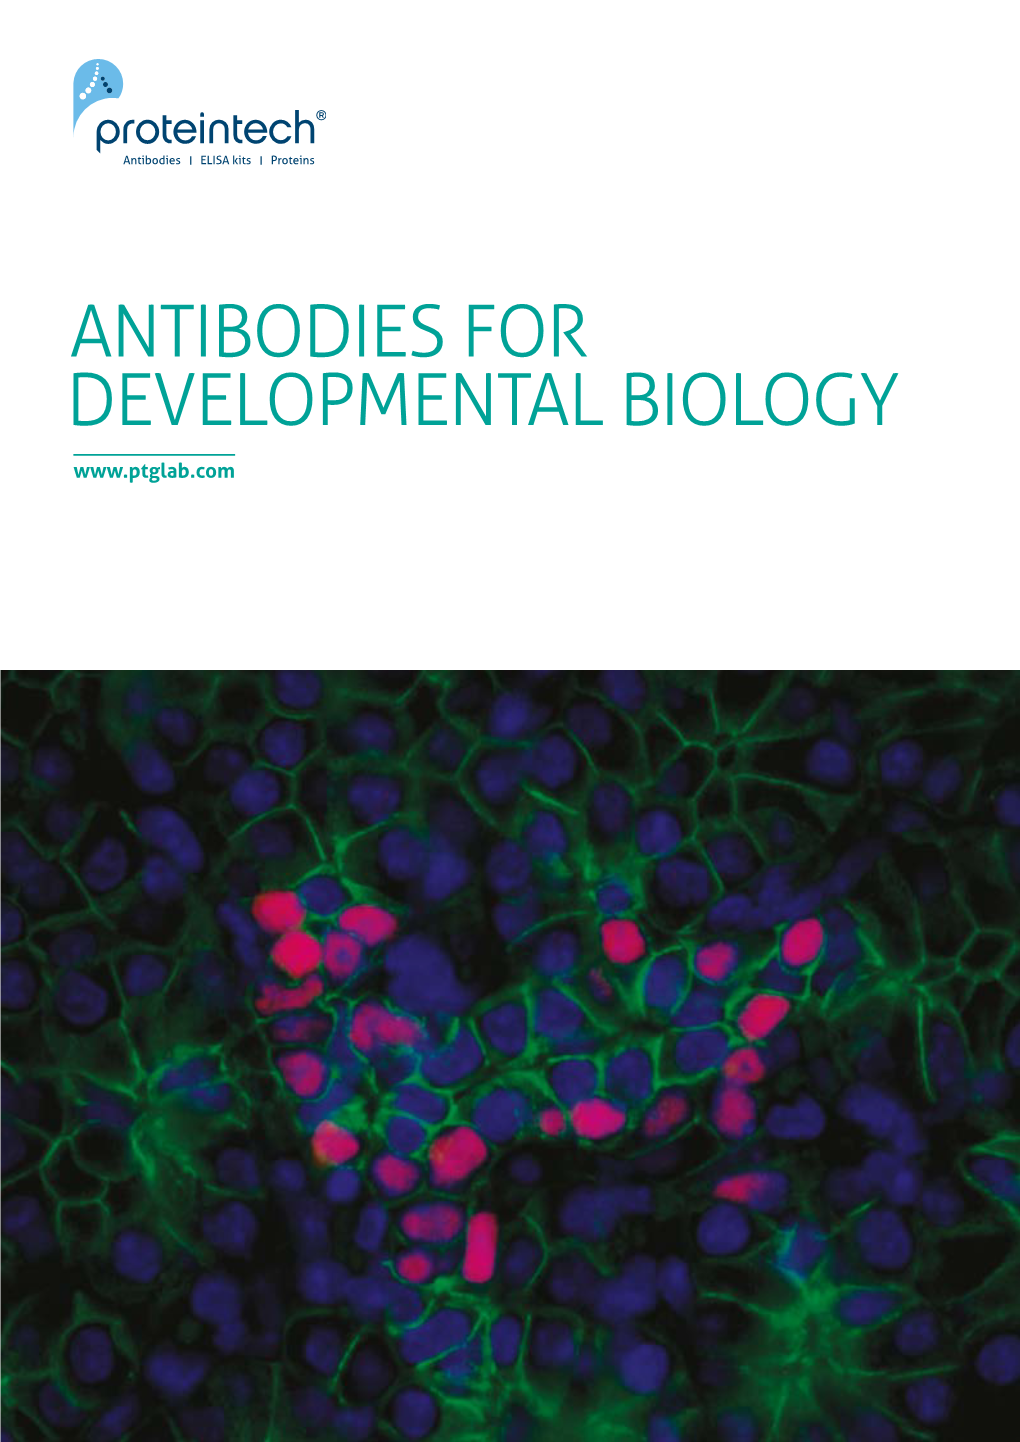 Developmental Biology Catalog